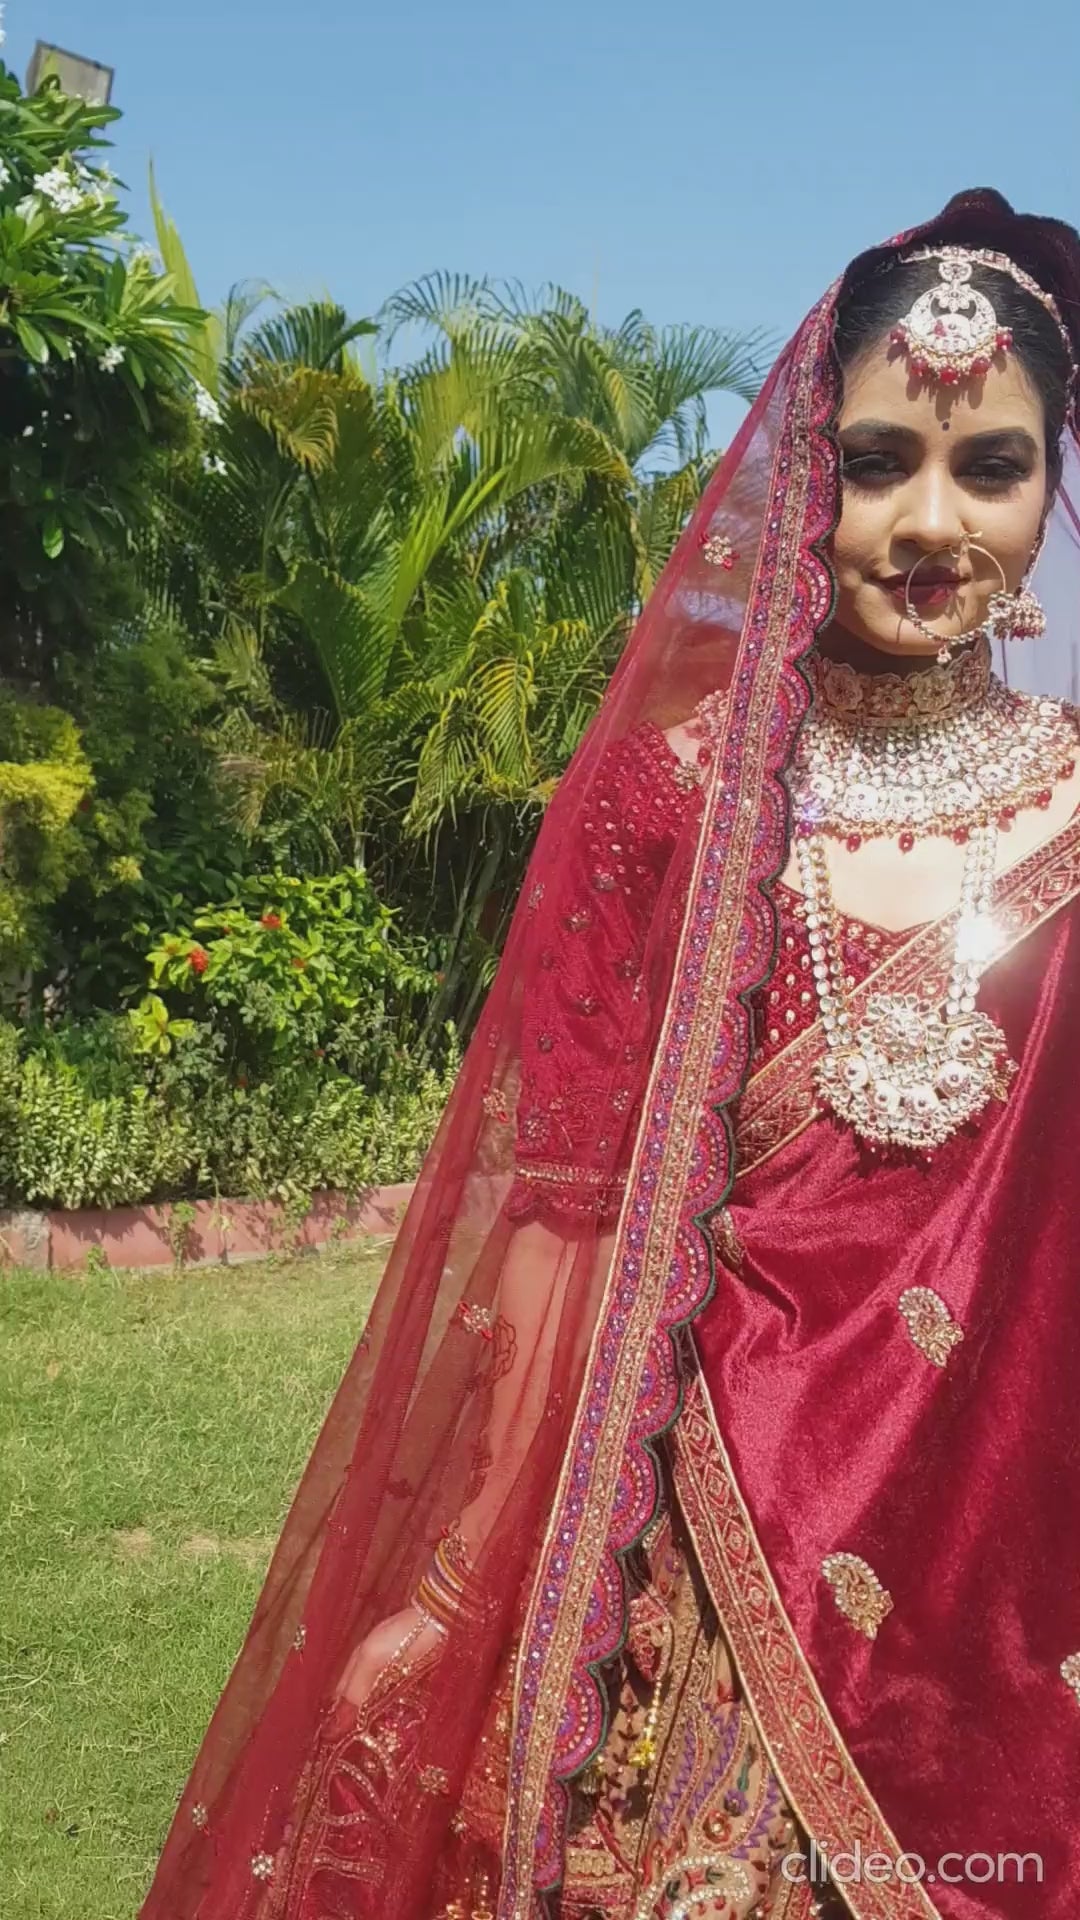 Bride Wedding Dress in Maroon Bridal Lehenga Frock #BN866 | Pakistani bridal  dresses, Pakistani bridal, Brides wedding dress